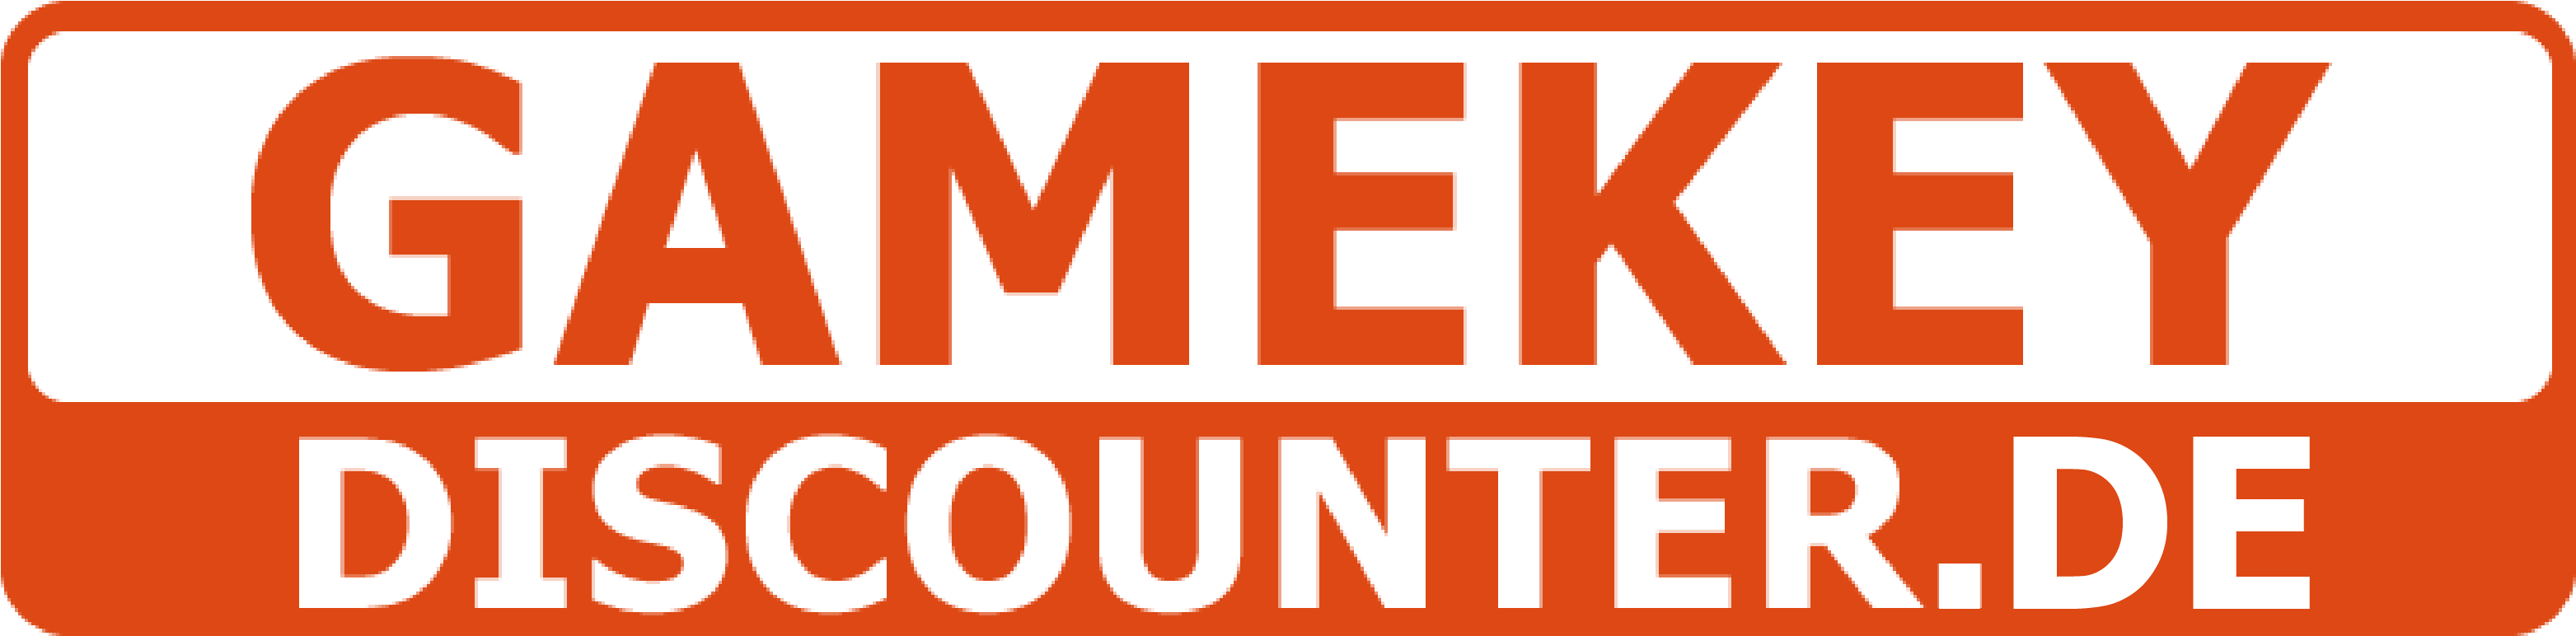 GamekeyDiscounter.de logo